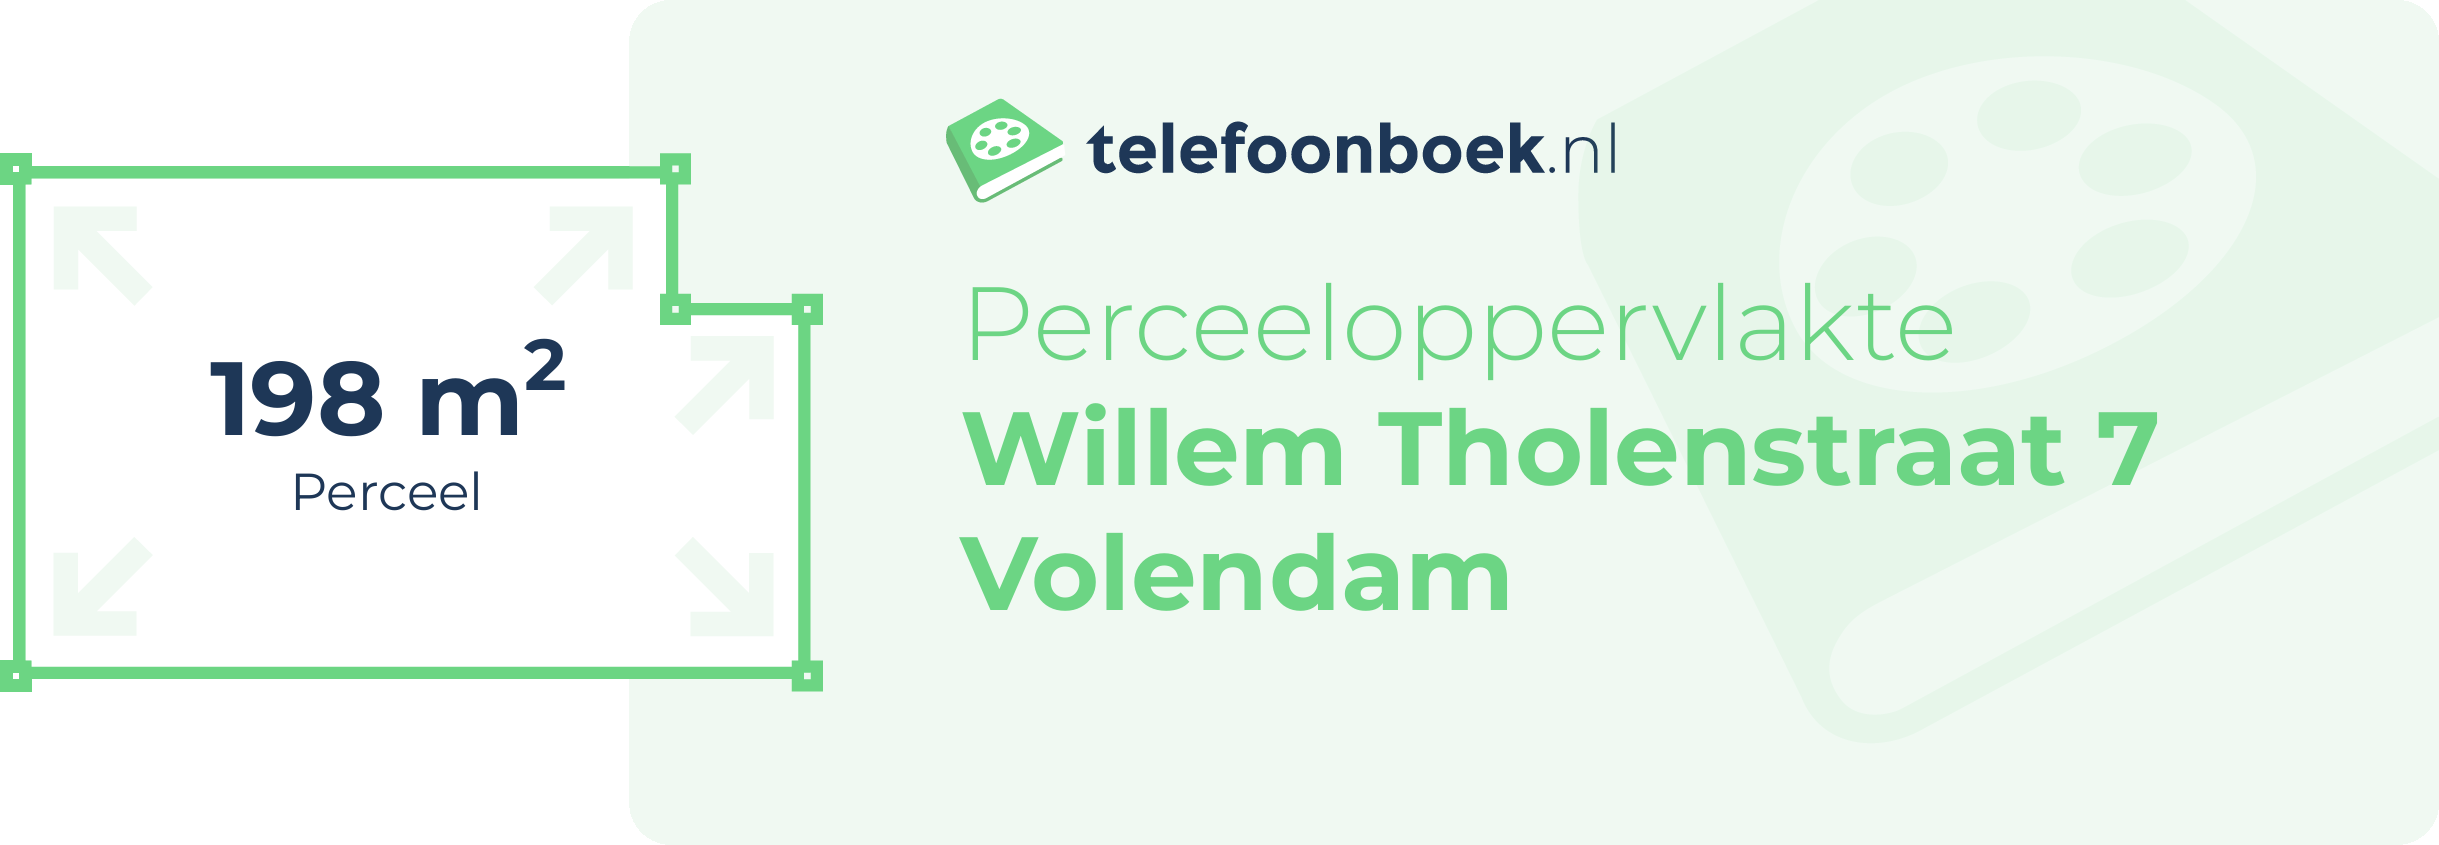 Perceeloppervlakte Willem Tholenstraat 7 Volendam